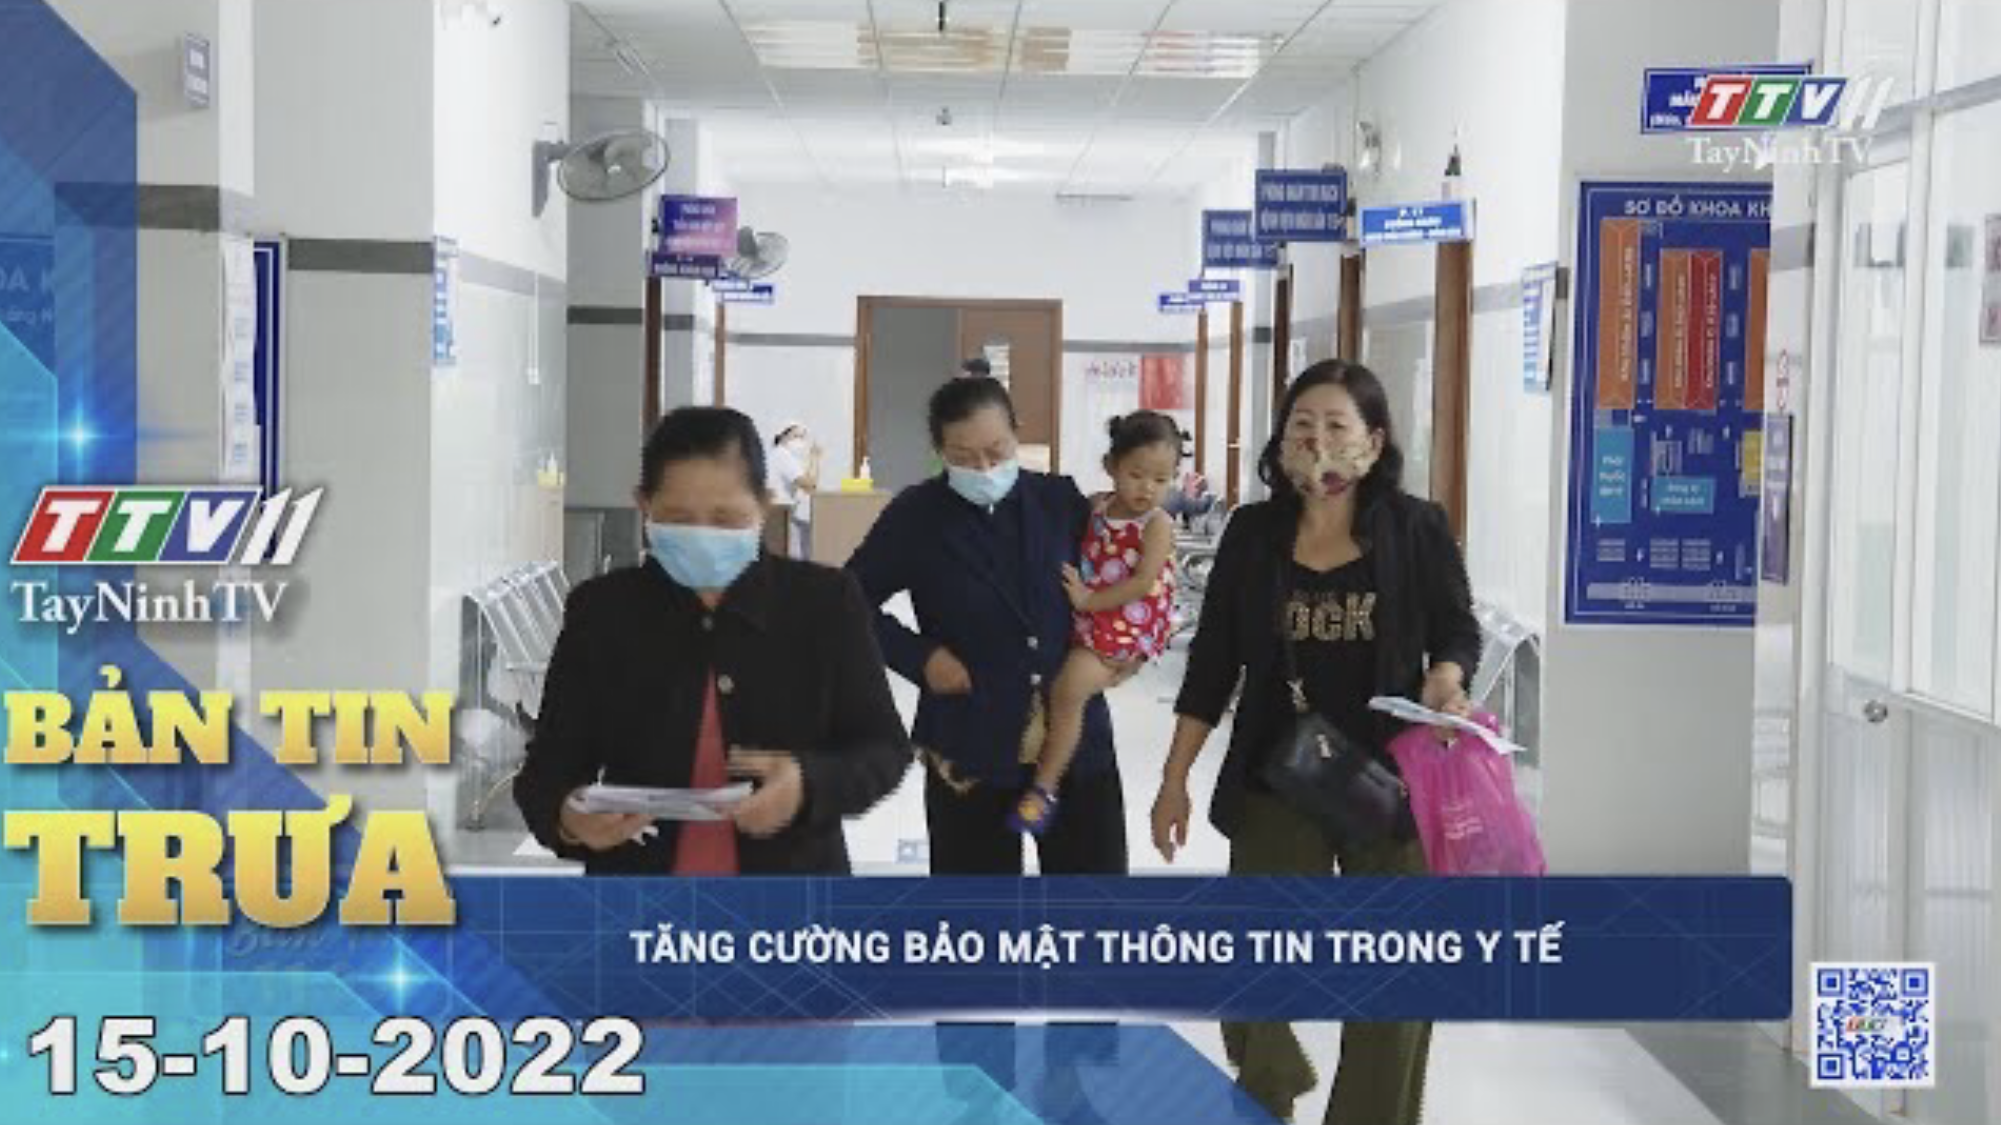 Bản tin trưa 15-10-2022 | Tin tức hôm nay | TayNinhTV